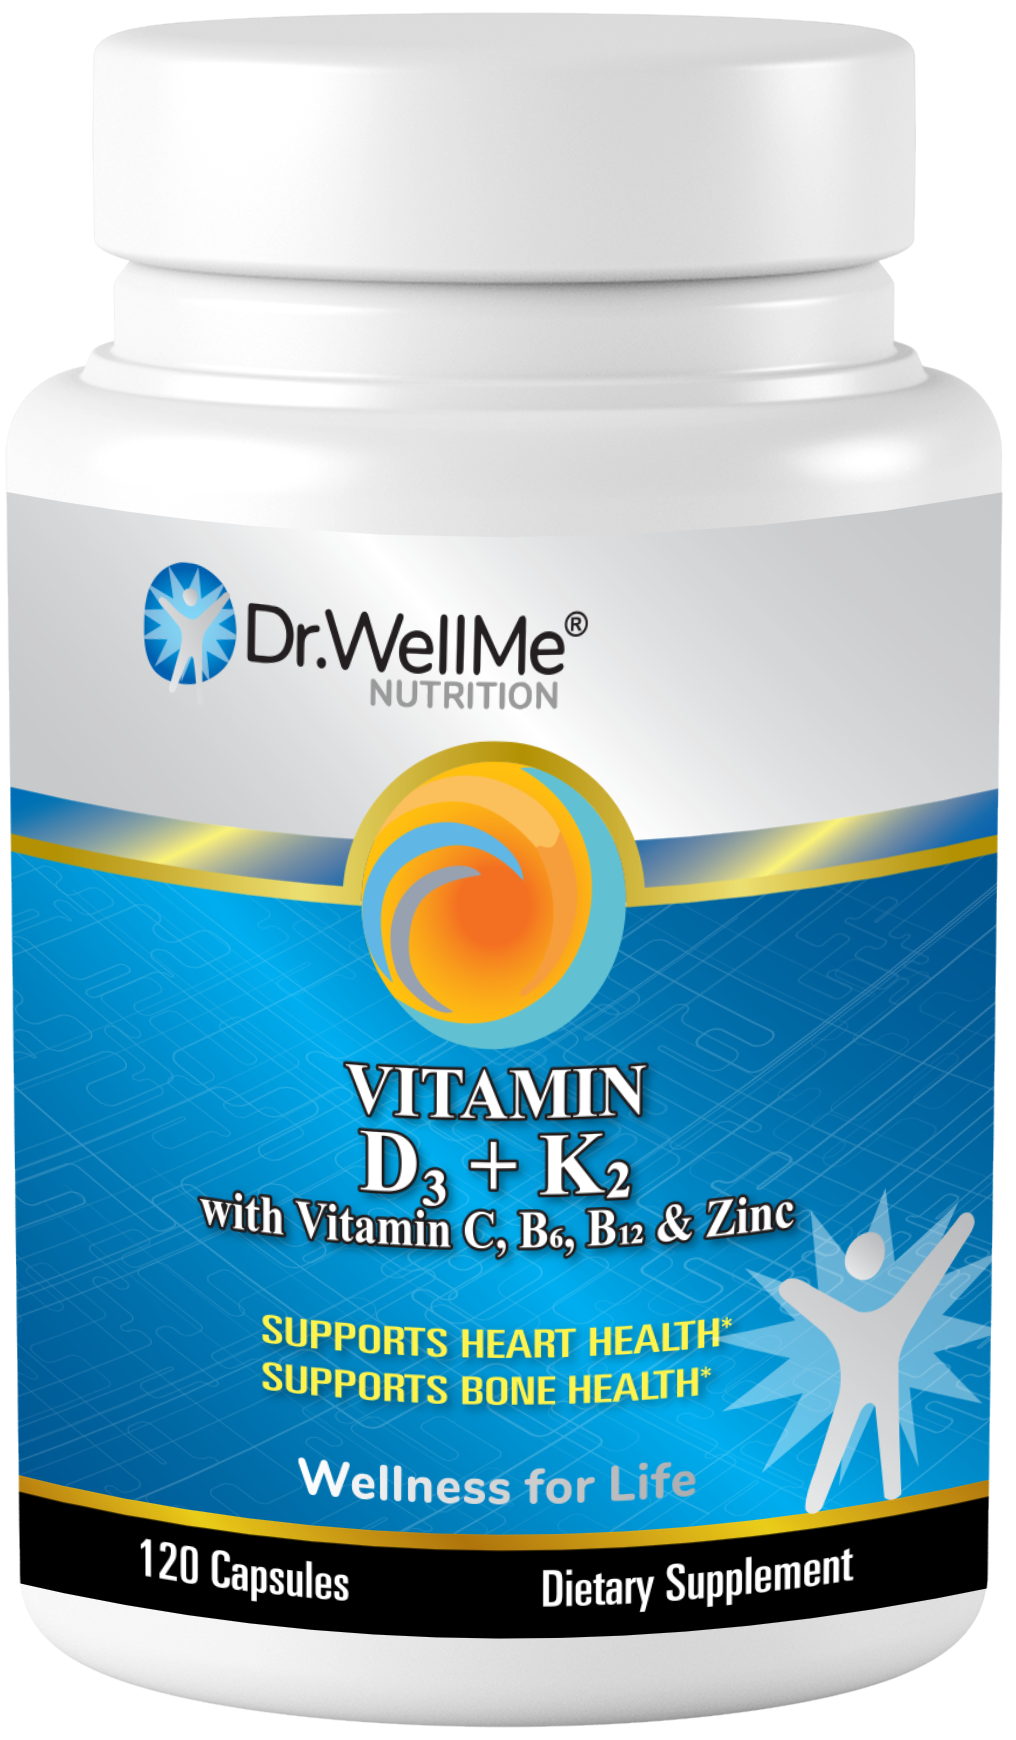 Dr.WellMe Vitamin D3 + K2 with Vitamin C, B6, B12 & Zinc Capsules